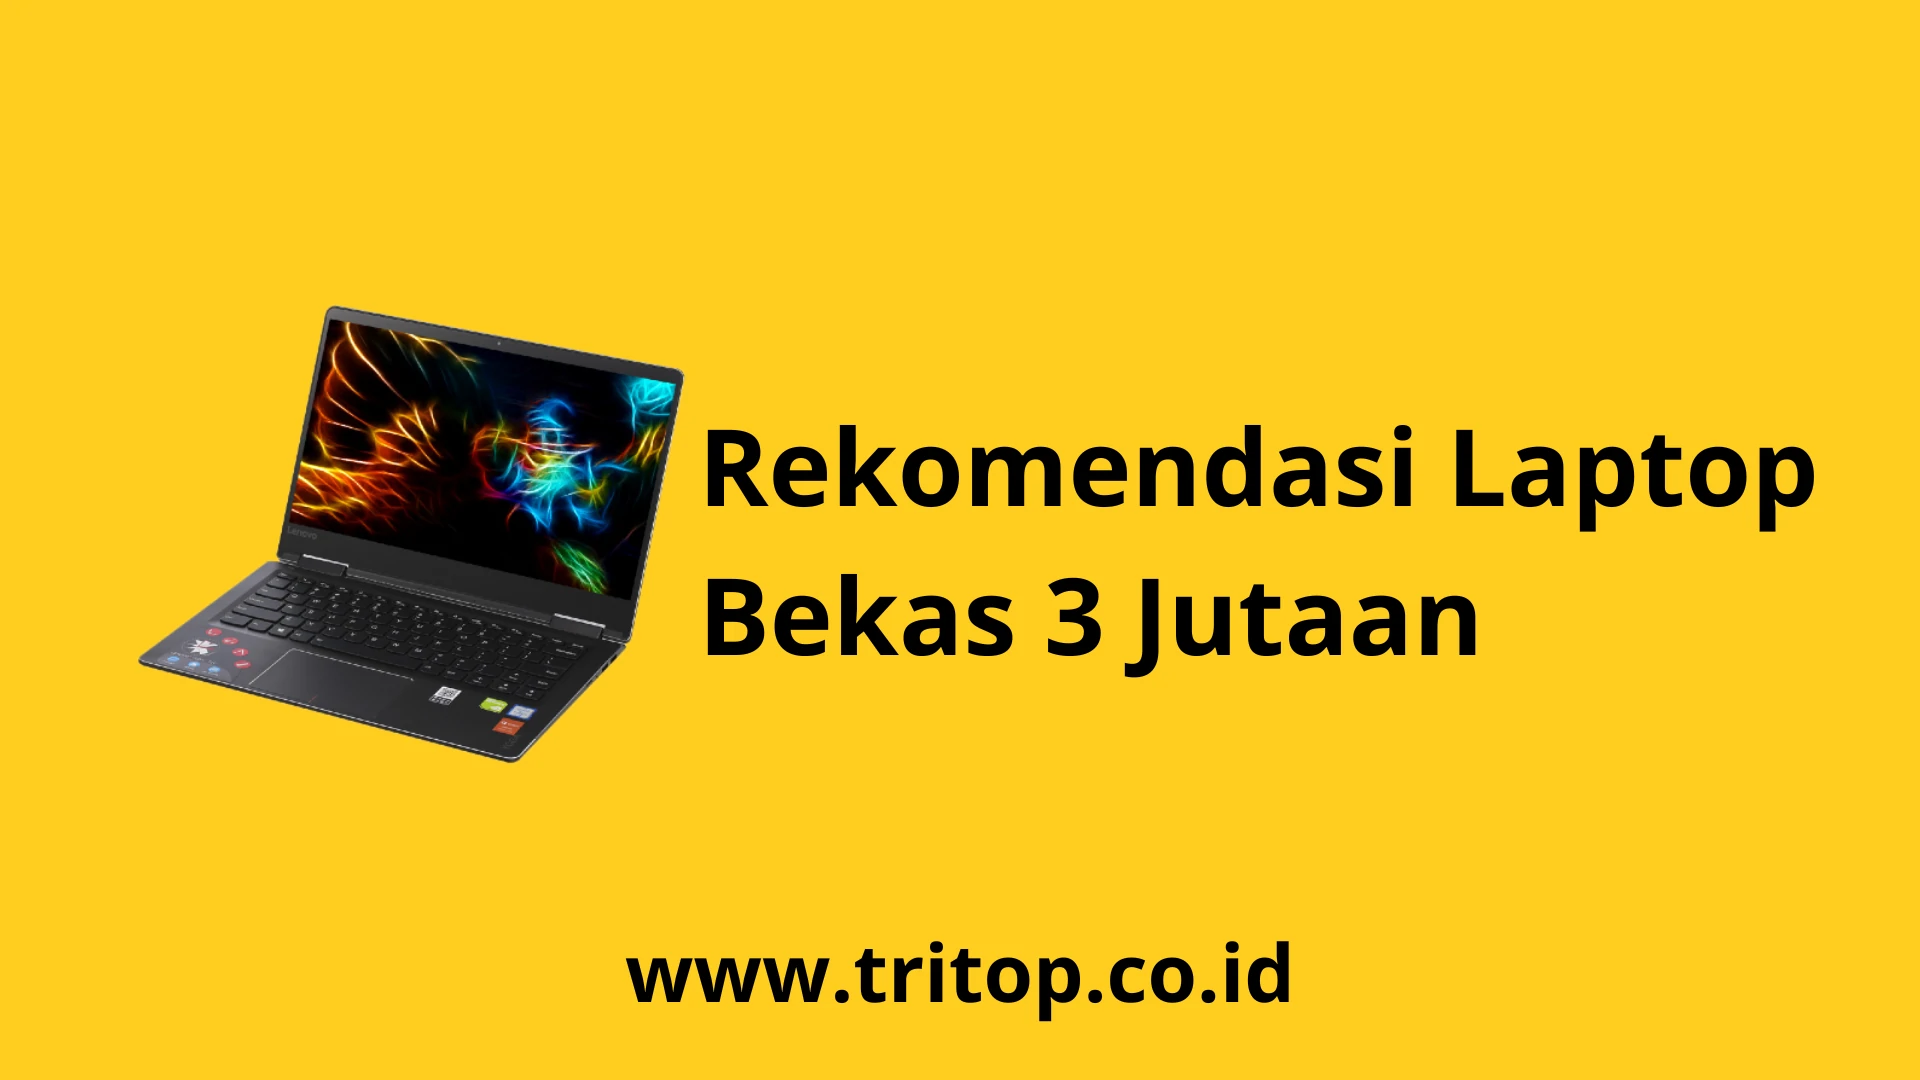 Laptop Bekas 3 Jutaan Tritop.co.id